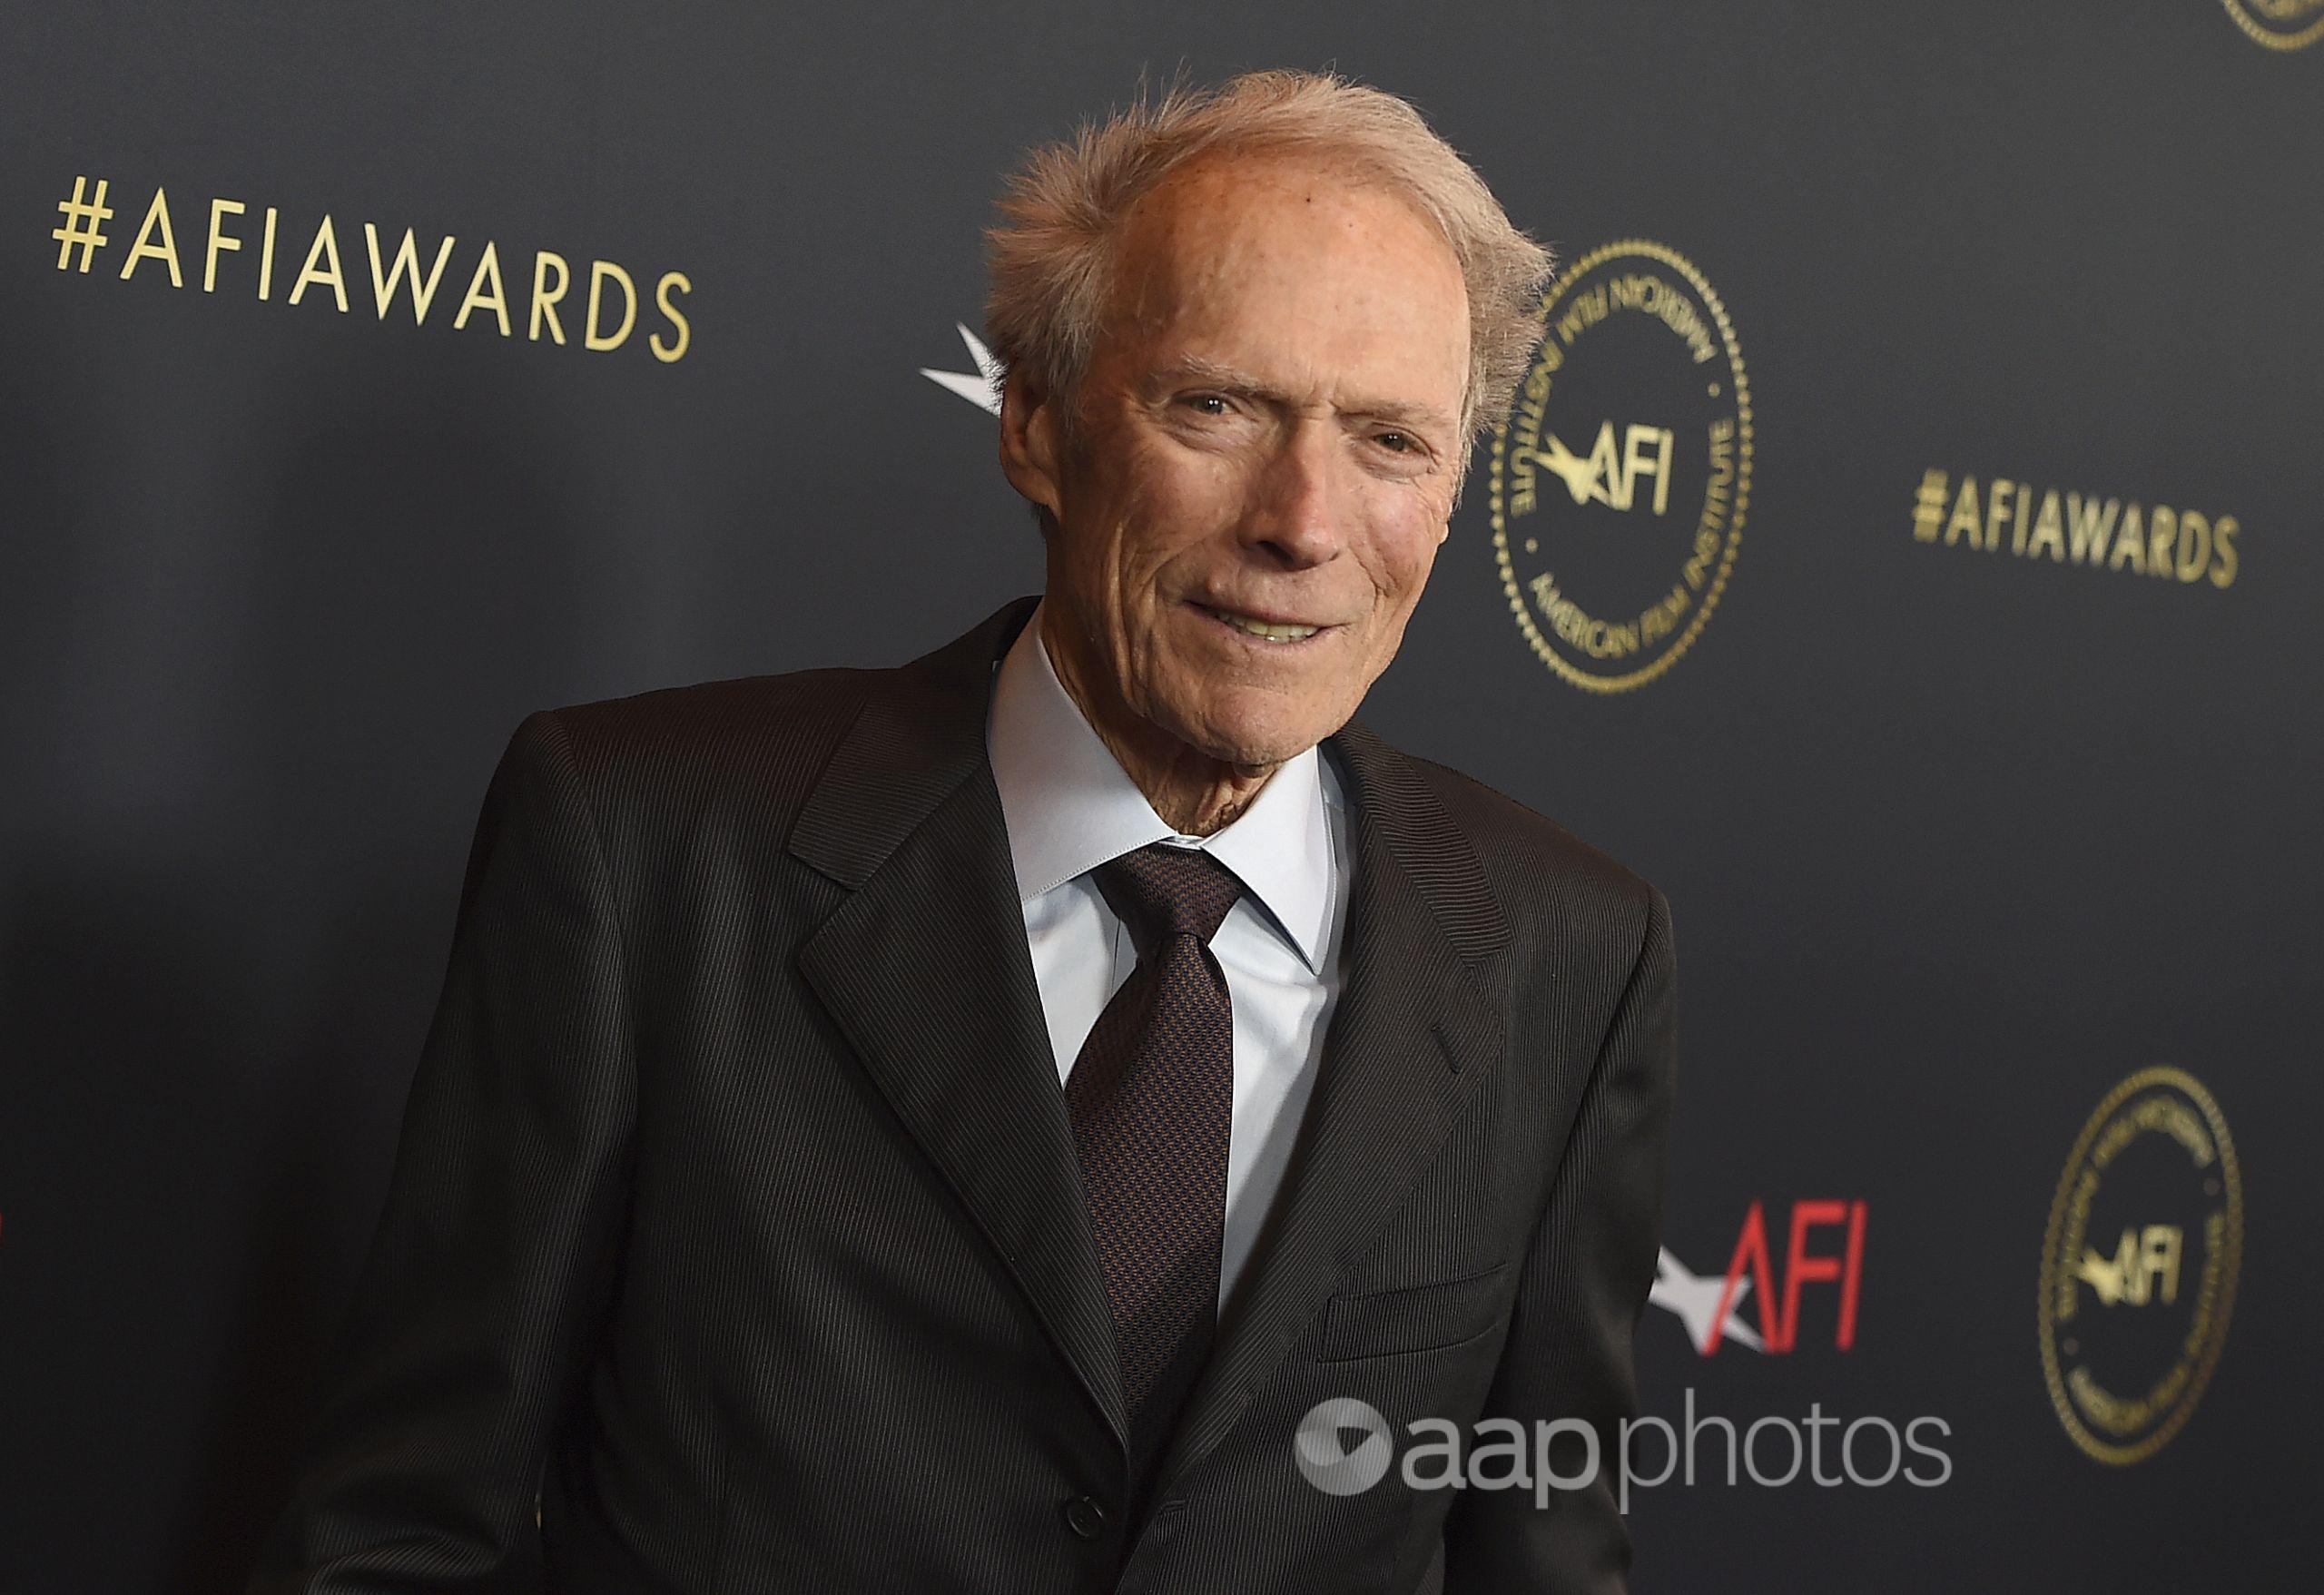 Hollywood veteran Clint Eastwood